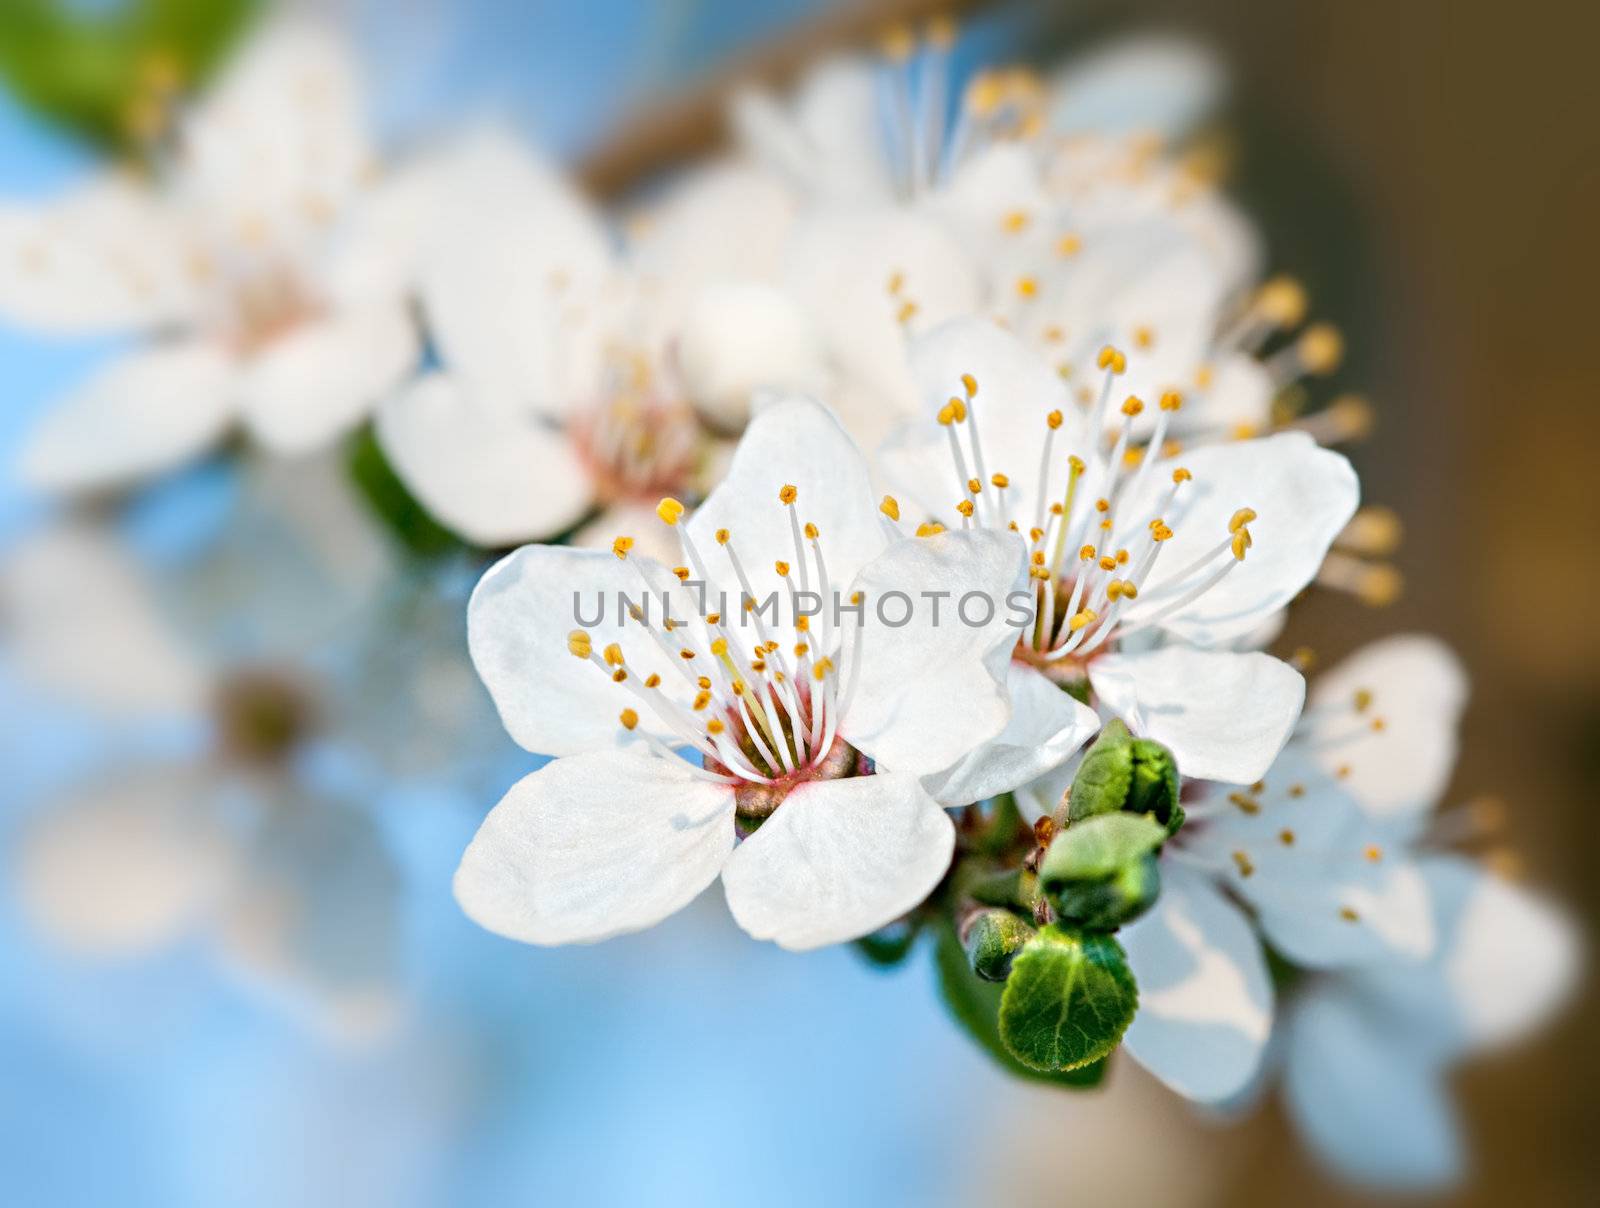 Spring flowers by palinchak